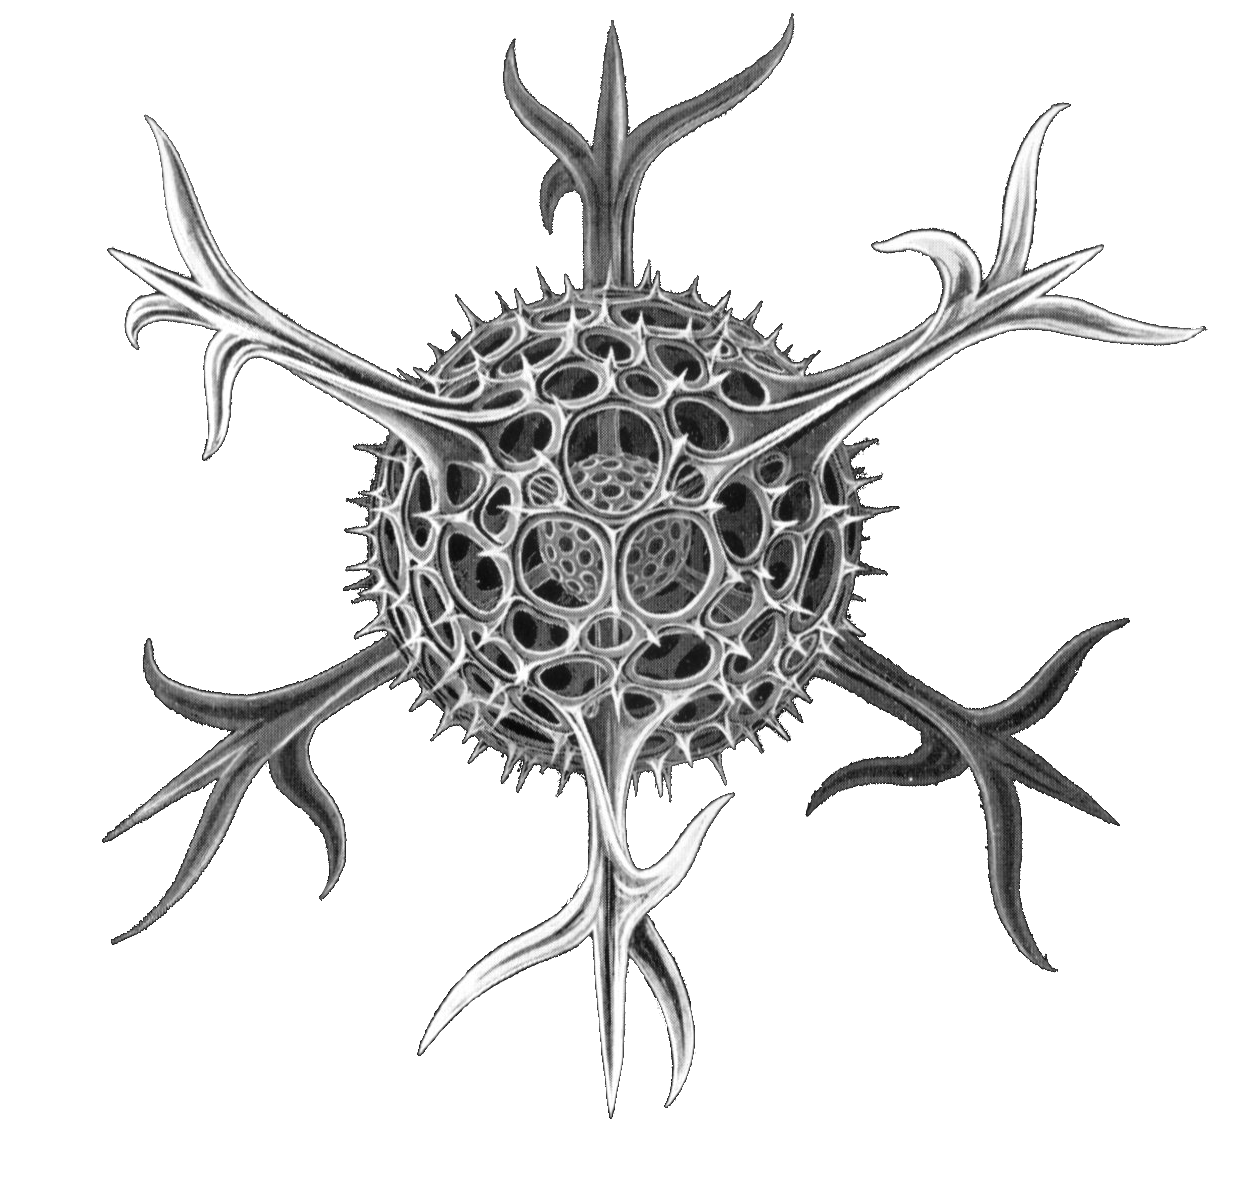 Spumellaria radiolaria by Ernst Haeckel